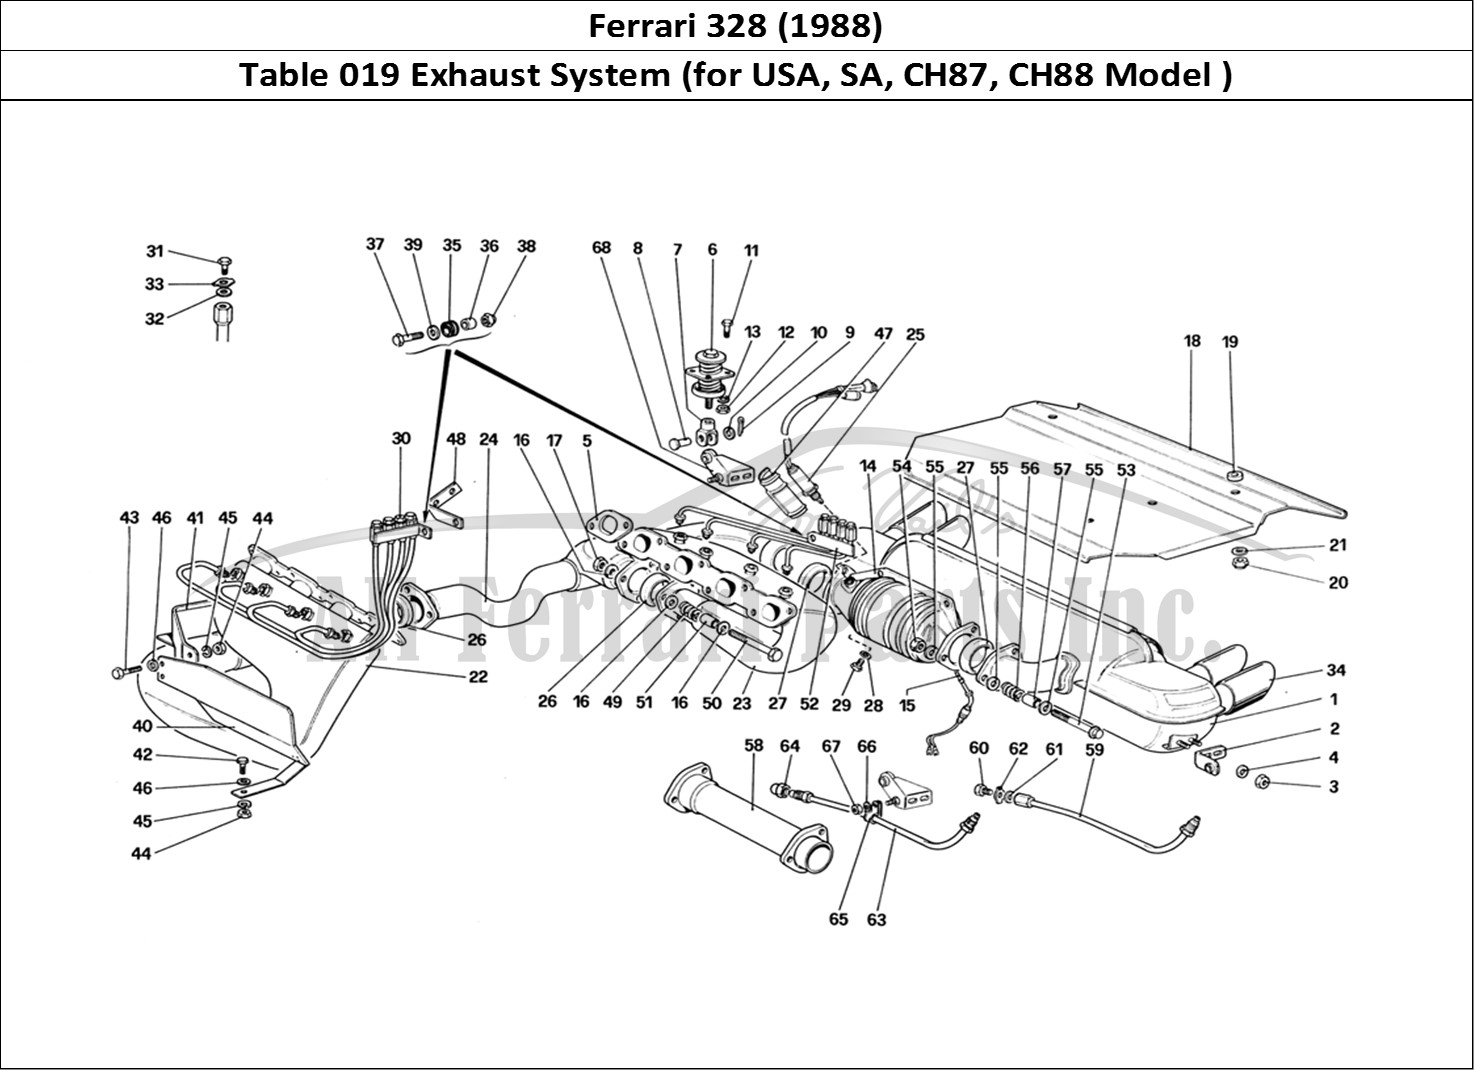 Ferrari Parts Ferrari 328 (1988) Page 019 Exhaust System (for US -